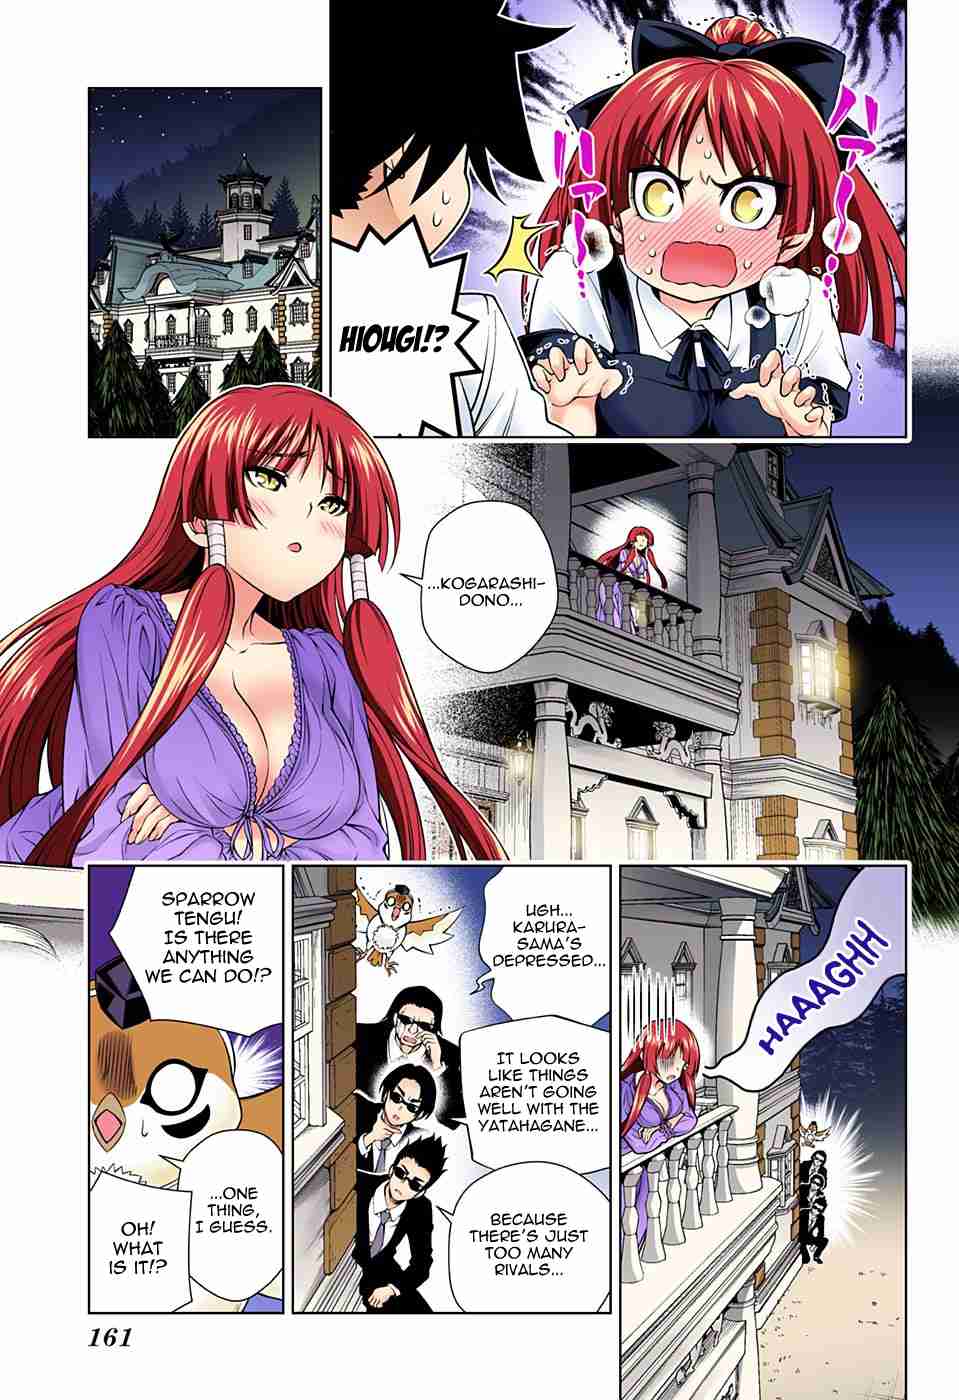 Yuragi sou no Yuuna san Digital Colored Comics Vol. 13 Ch. 115 Karura sama's Struggles